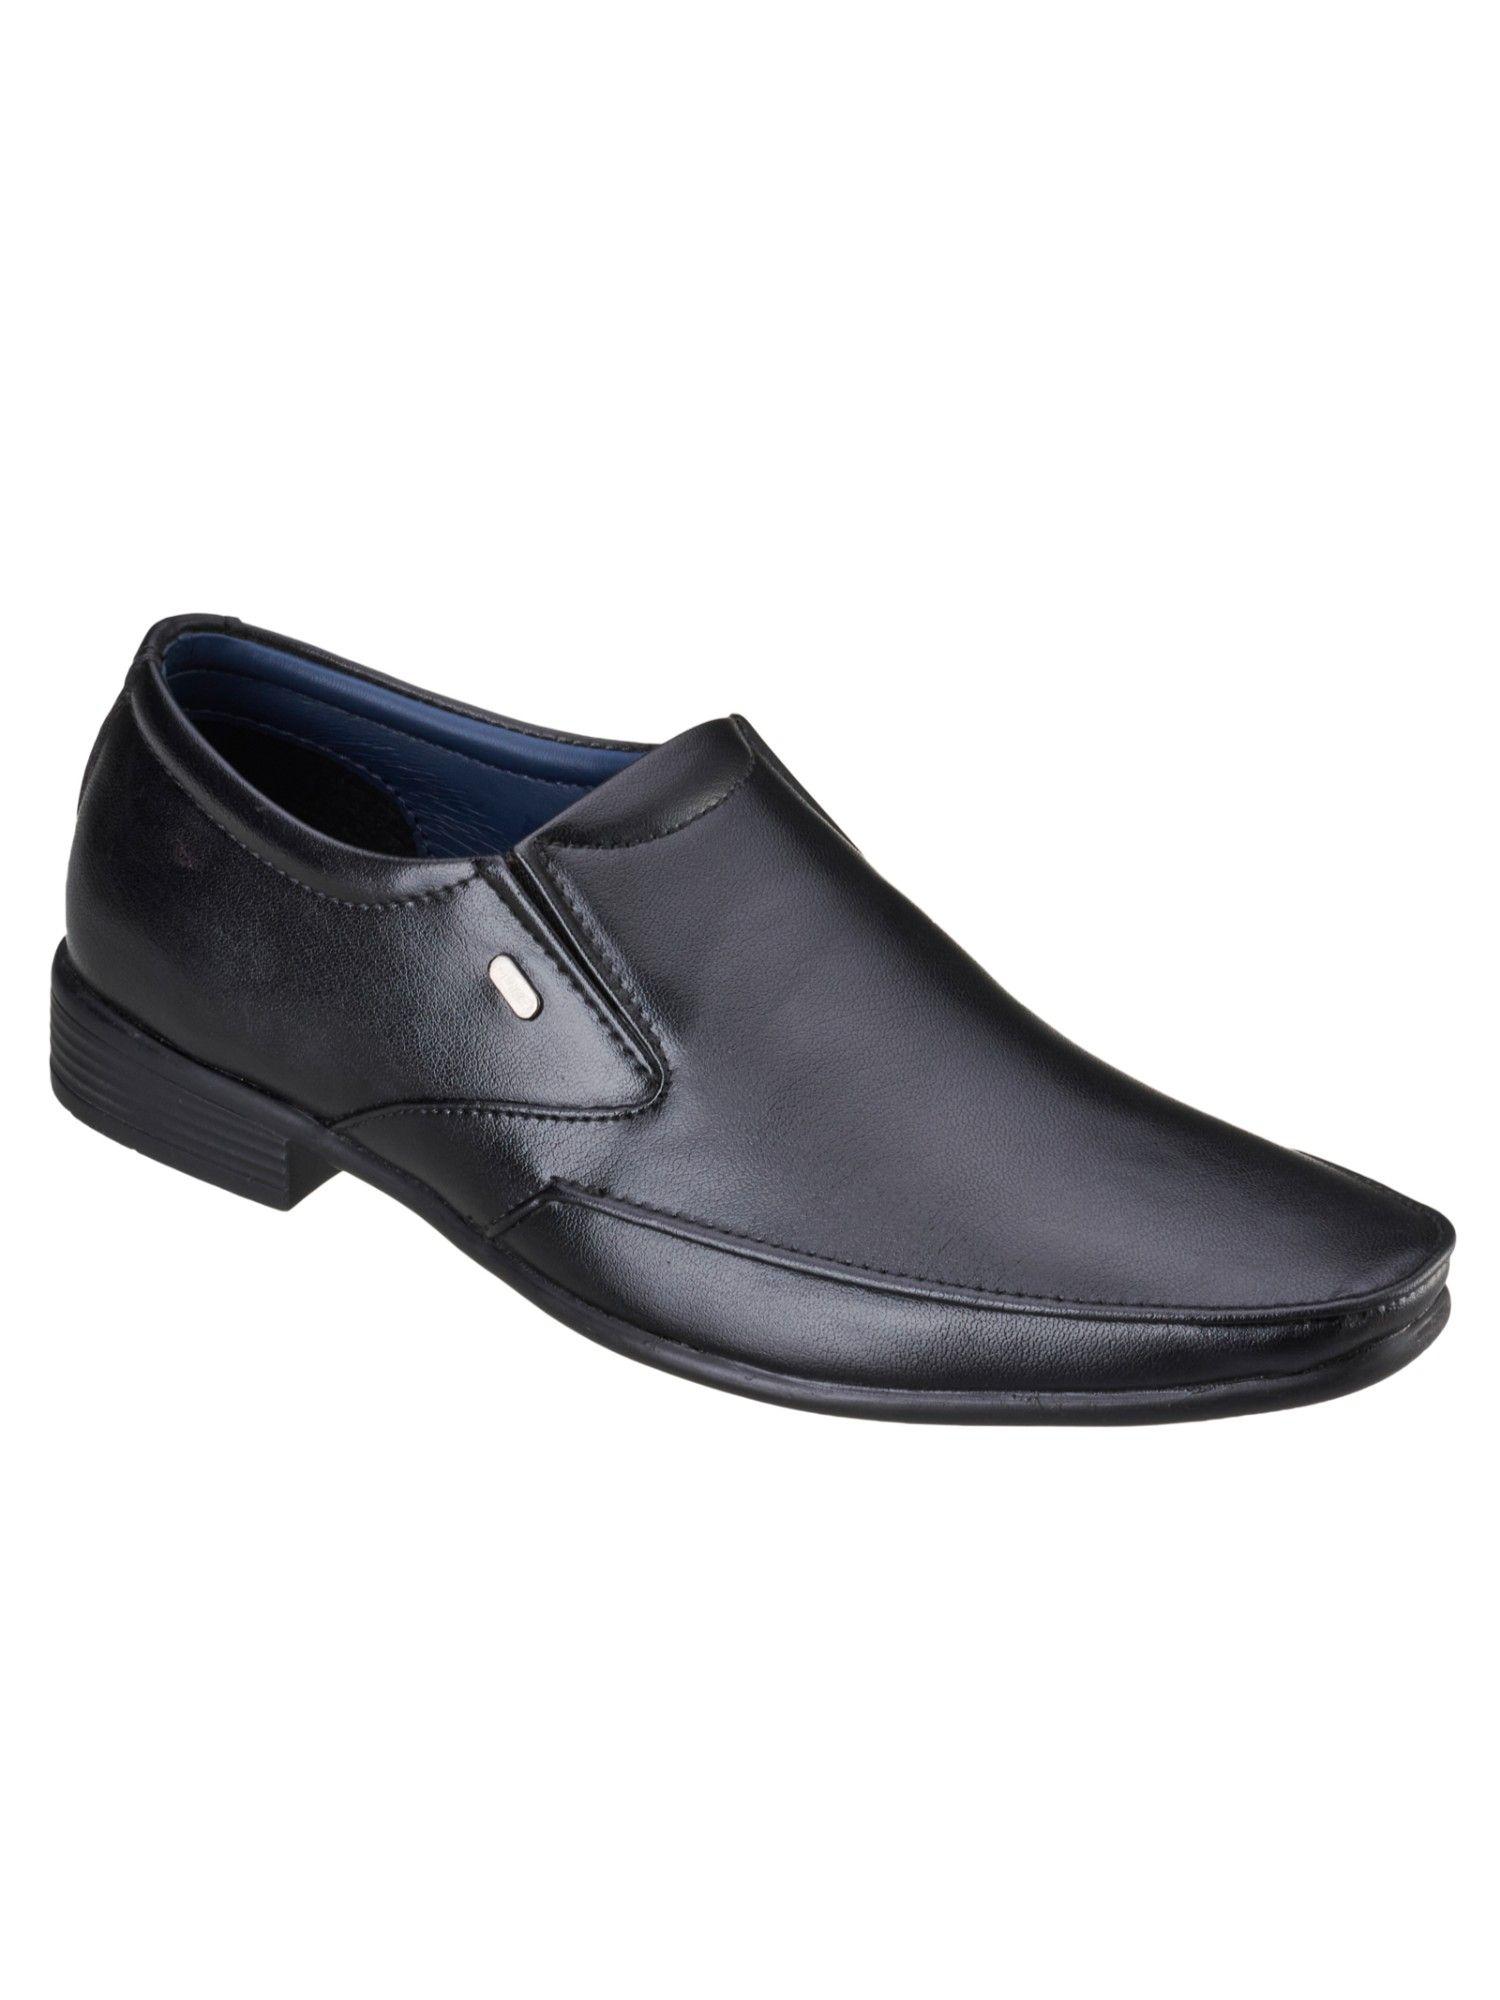 solid/plain-black-formal-shoes